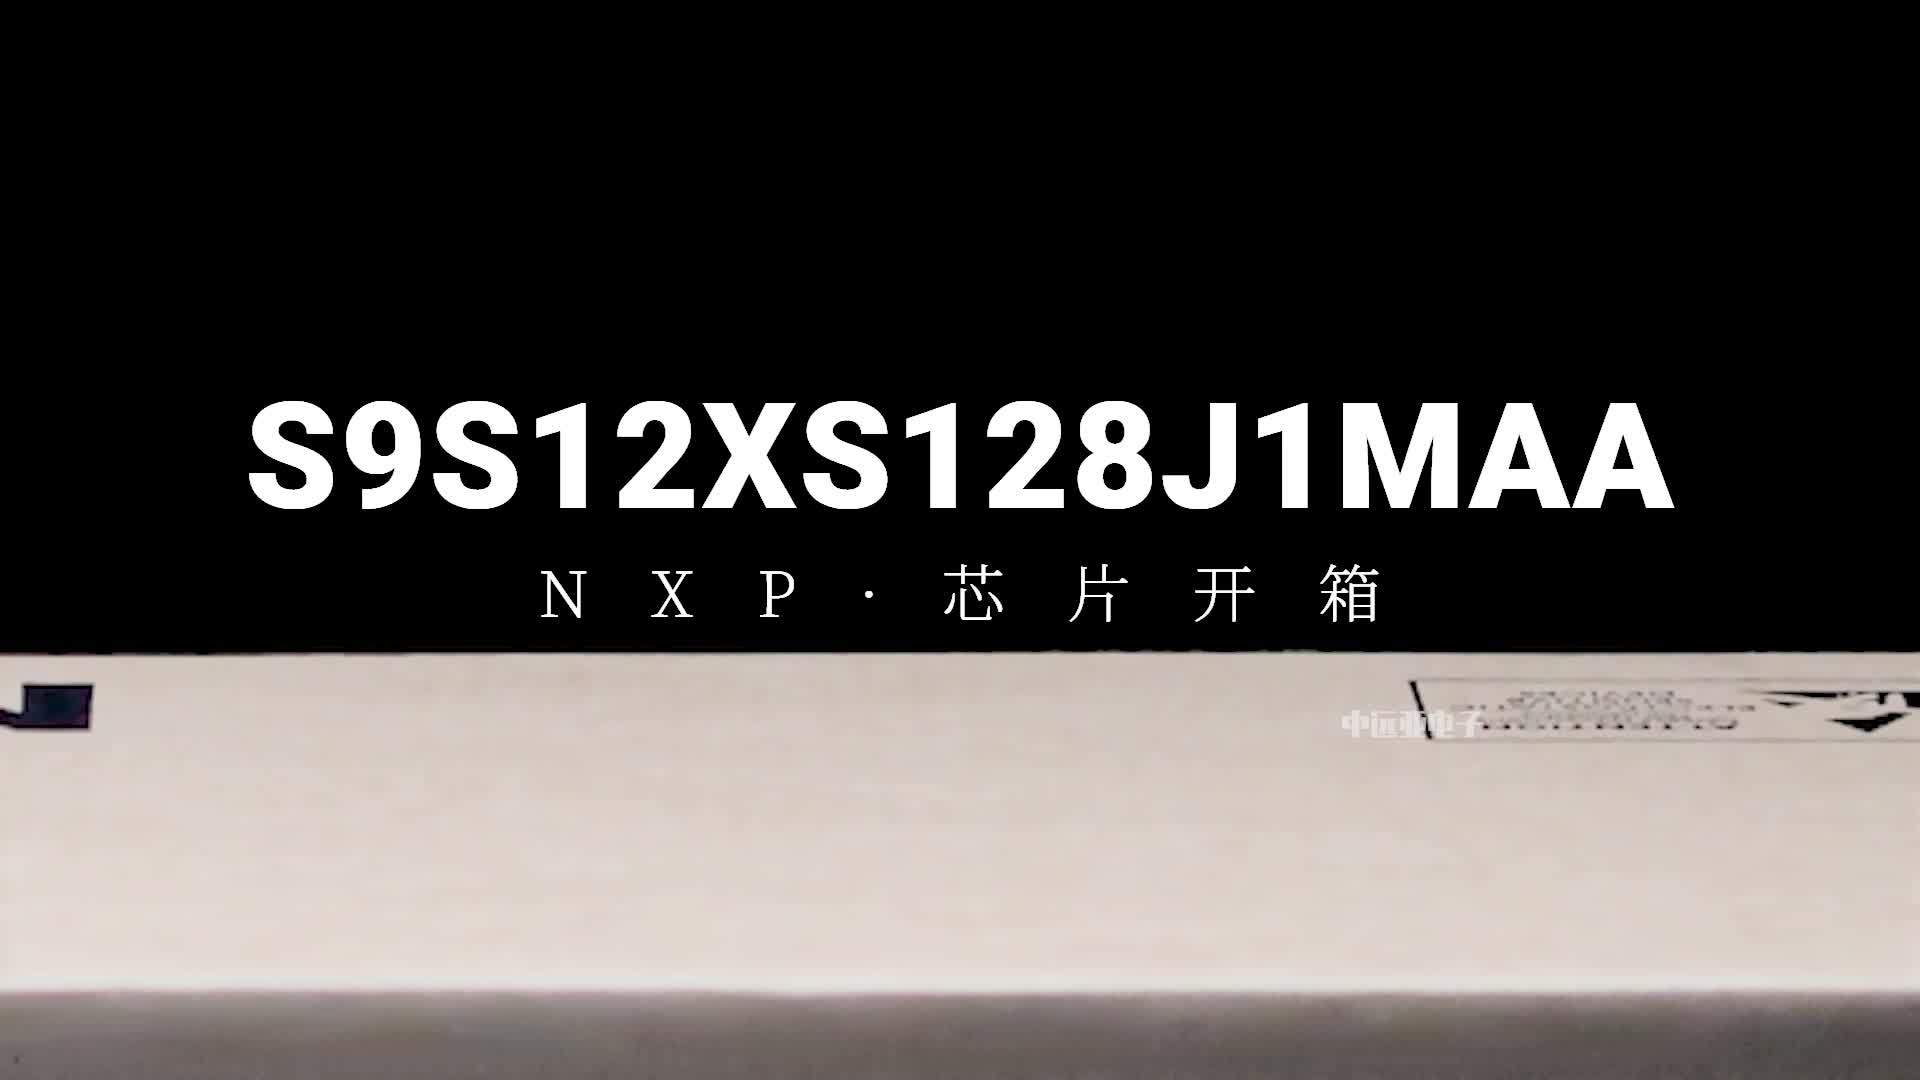 NXP芯片-S9S12XS128J1MAA，汽车芯片开箱！